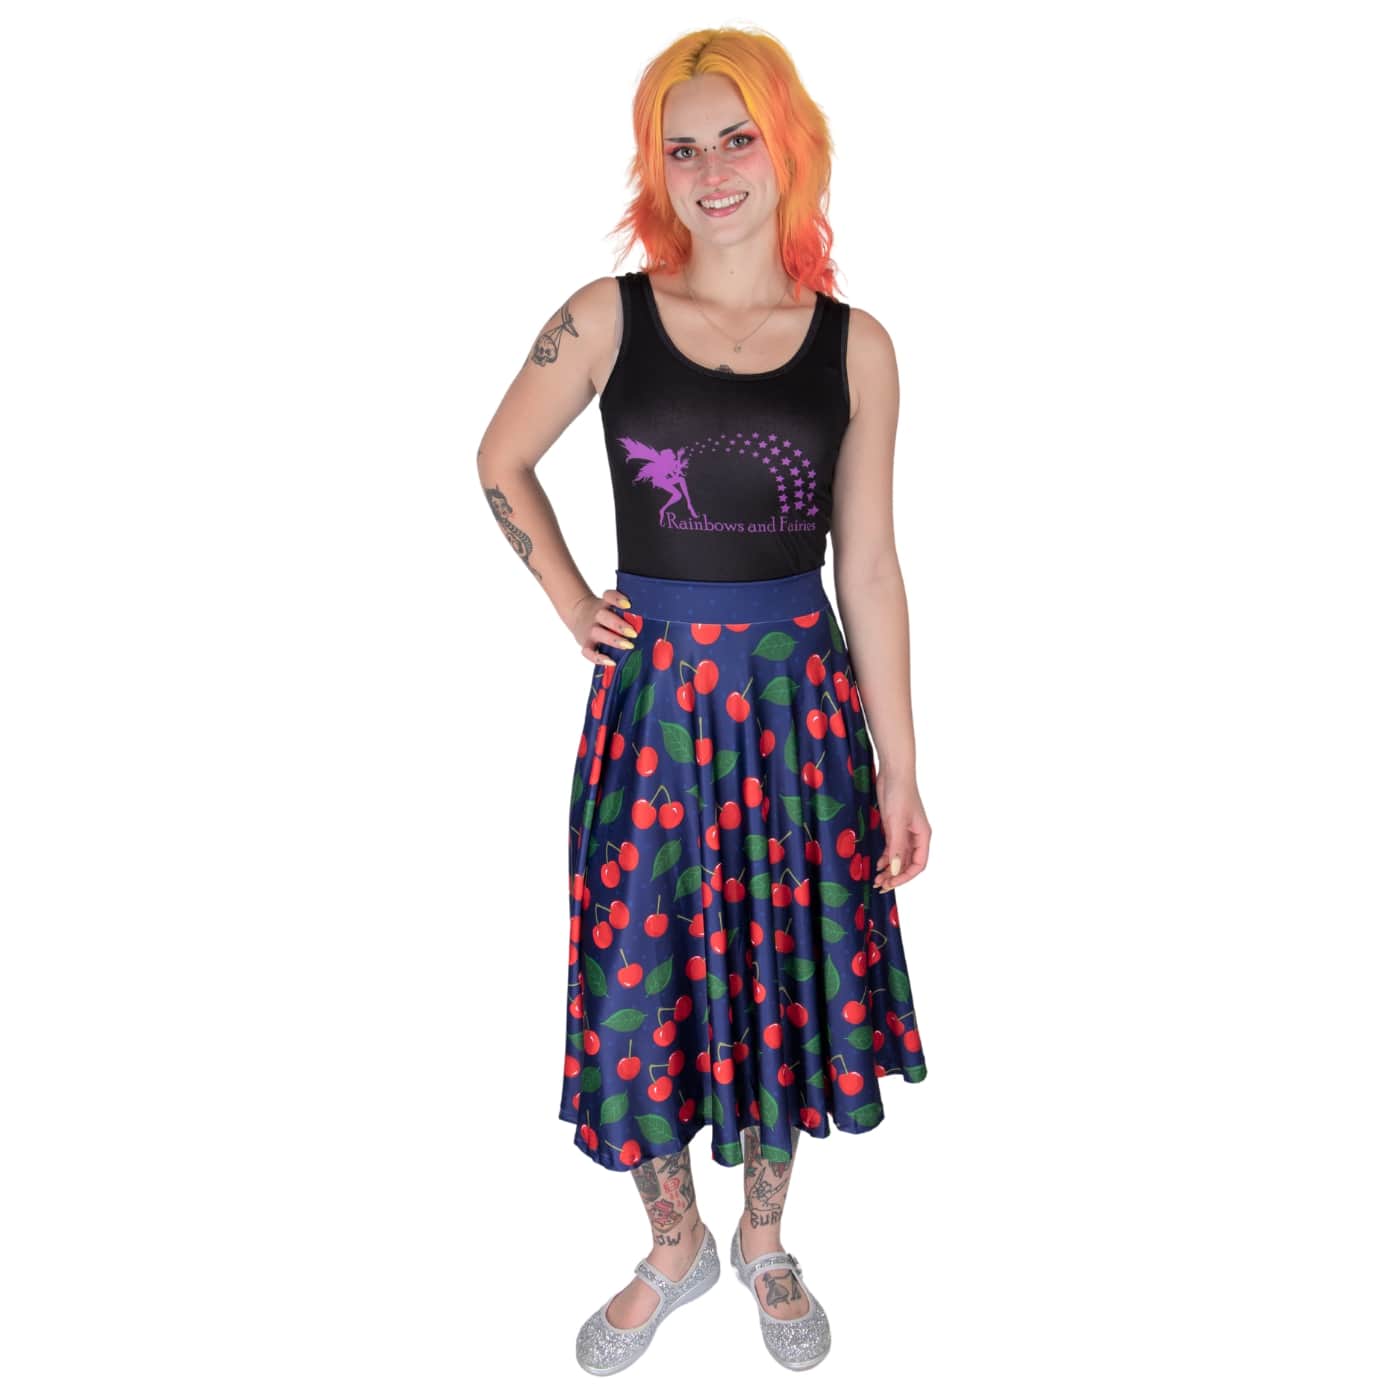 Cherry Swishy Skirt by RainbowsAndFairies.com.au (Cherries - Cherry Print - Rockabilly - Circle Skirt - Skirt With Pockets - Kitsch - Vintage Inspired) - SKU: CL_SWISH_CHERR_ORG - Pic-03